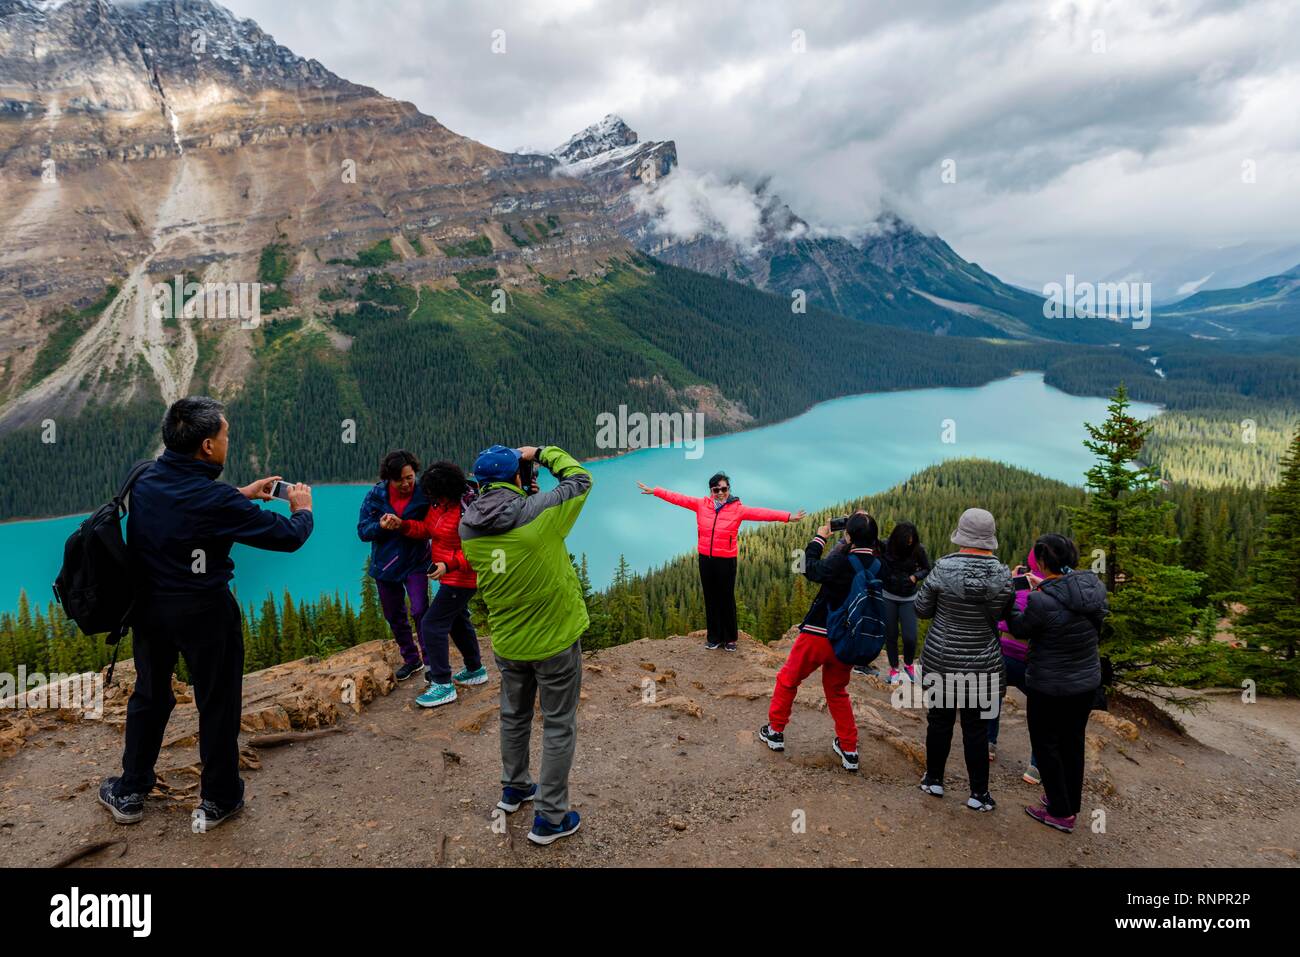 Asiatische Touristen posieren für ein Foto, Türkis Lake, Peyto Lake, Rocky Mountains, Banff National Park, Alberta, Kanada, Nordamerika Stockfoto